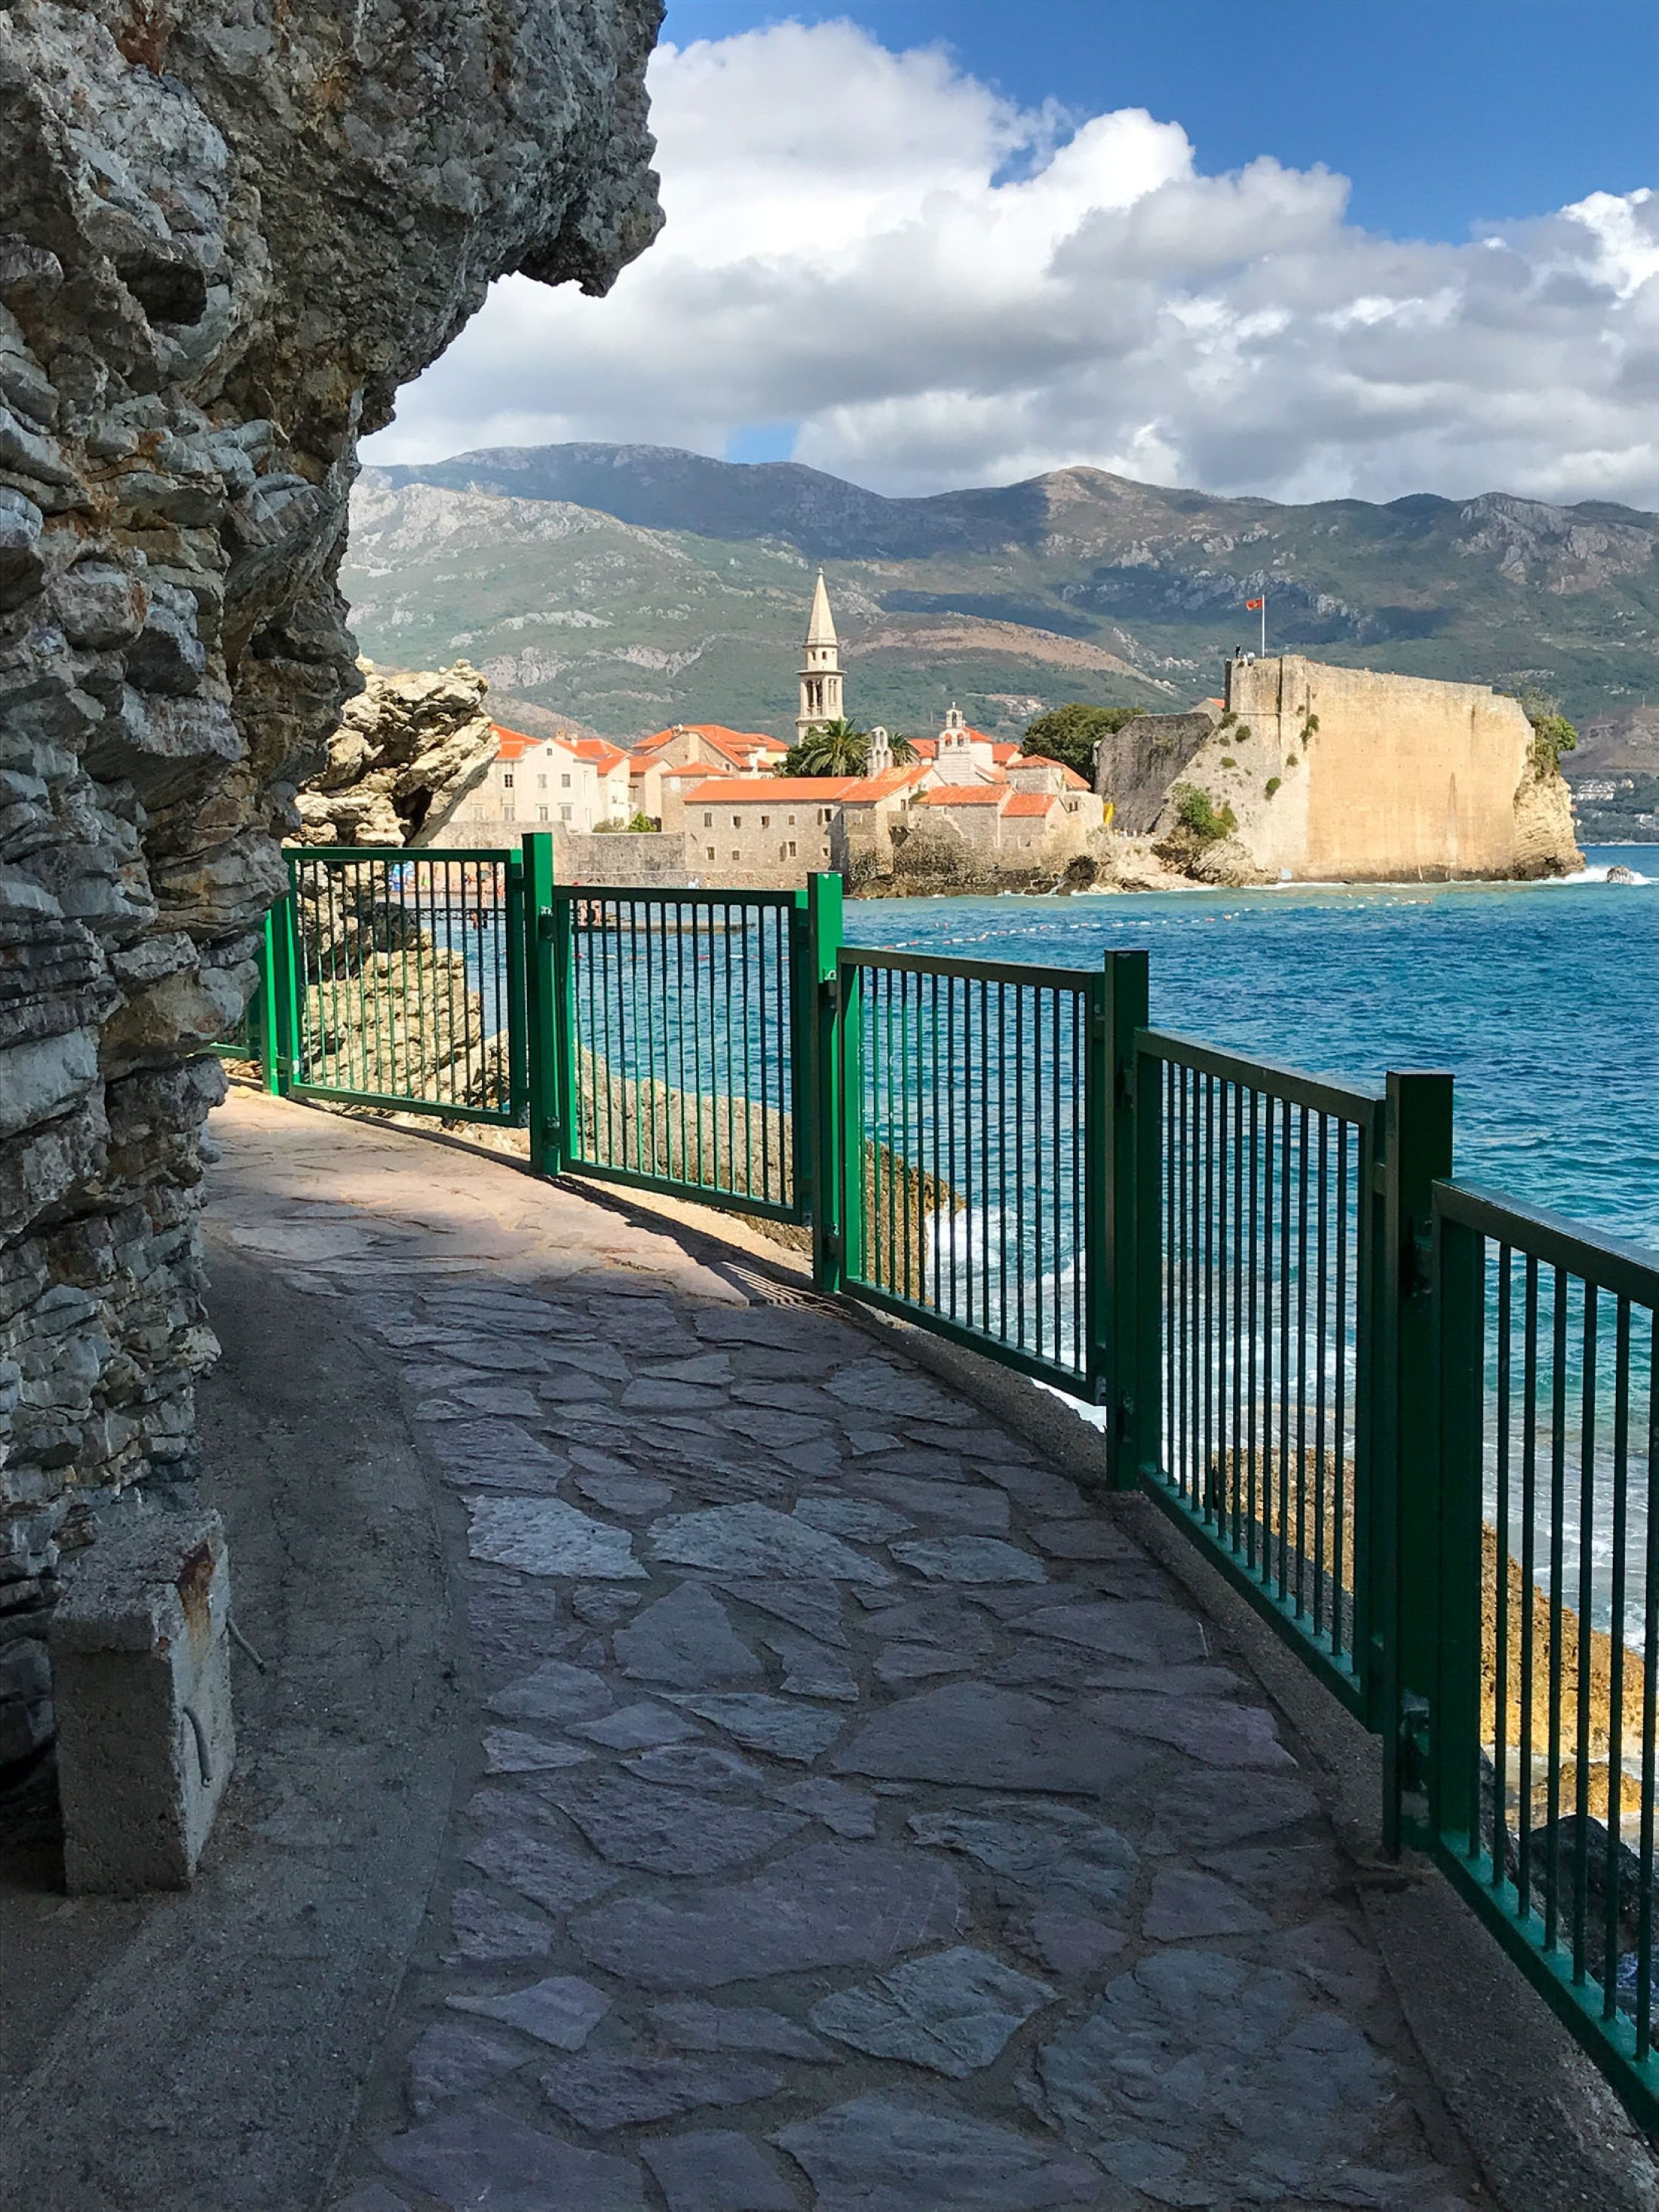 A path to Mogren Beach from the Old Town, Stari Grad, in Budva, Montenegro.  (Photo by Özge Şengelen)